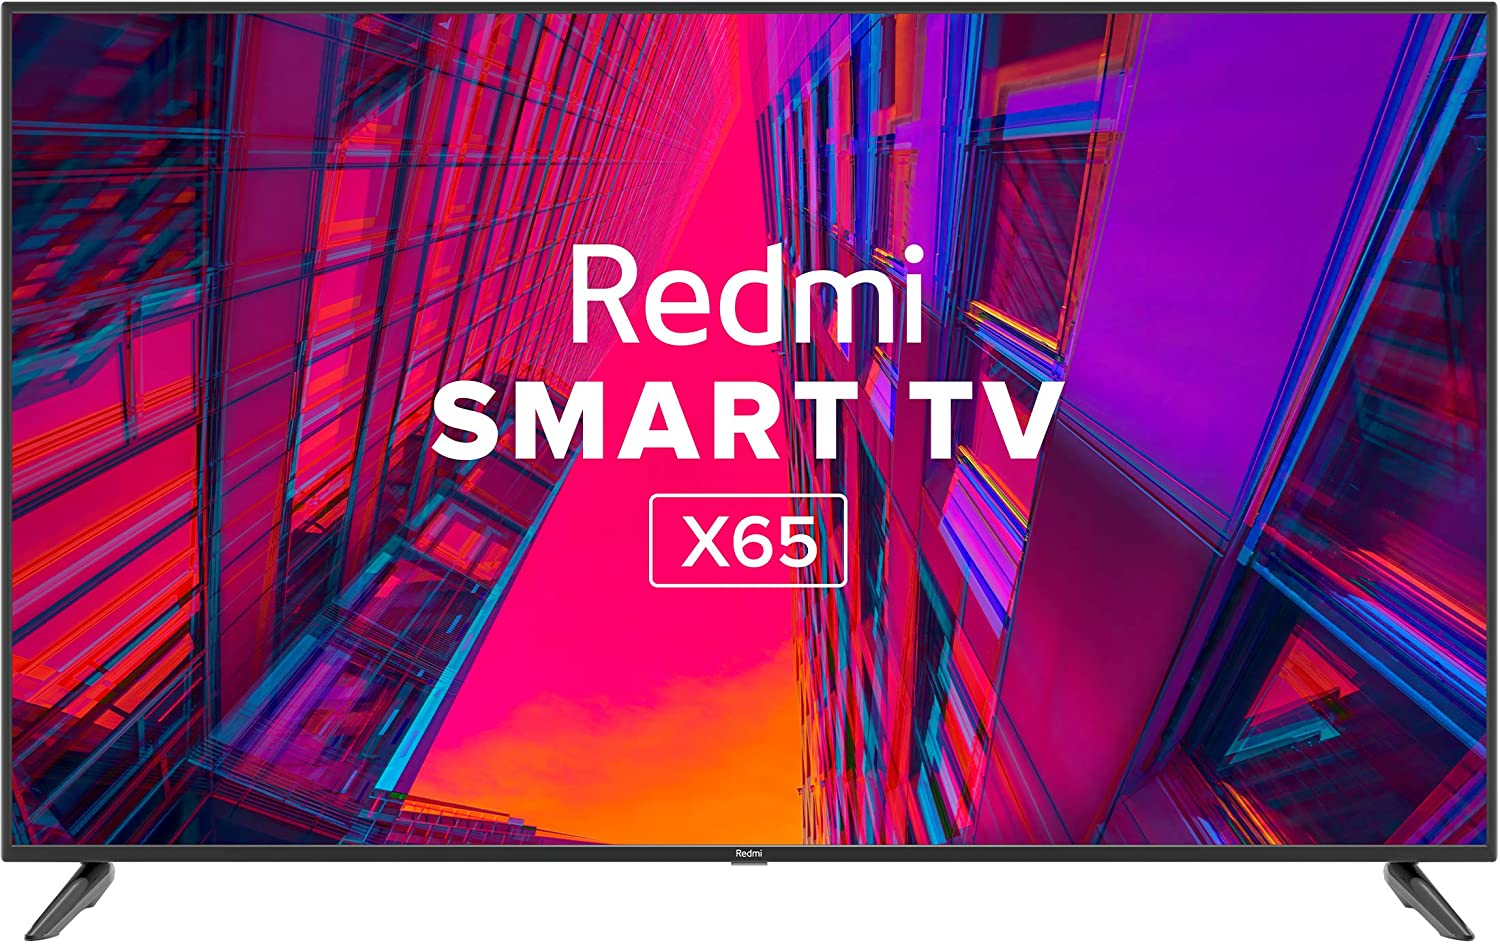 Amazon Deal: Bumper Holi Discount On Redmi TV! Buy Redmi 4K Ultra HD TV At This Price